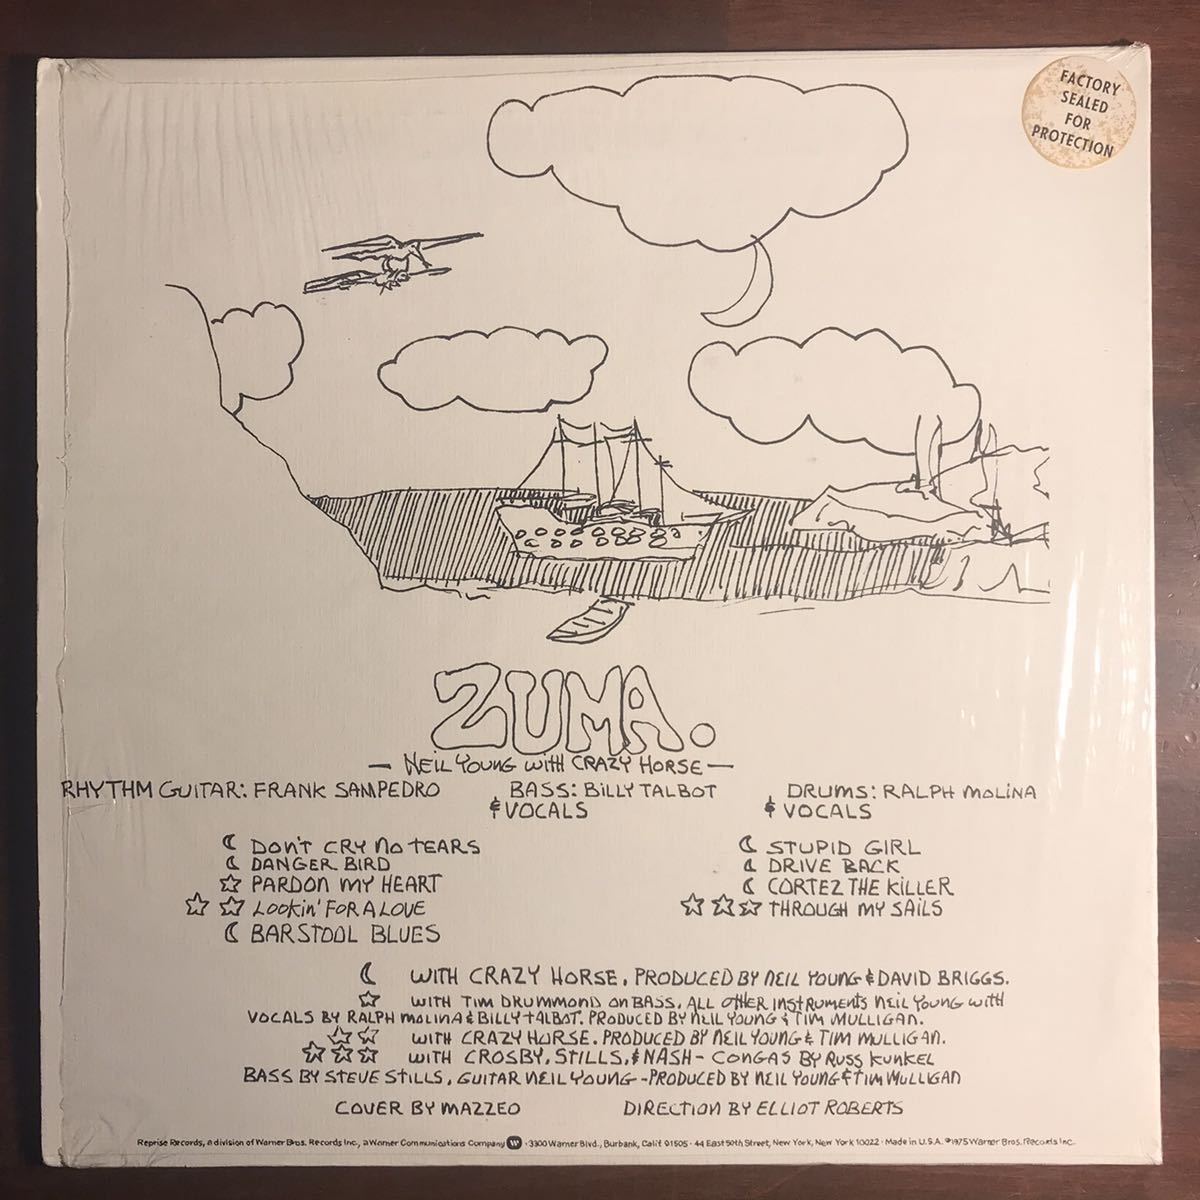 [US Orig shrink есть LP]Neil Young Crazy Horse|Zuma|31966-1E 1T / 31967-1E 1T|75 год рис оригинал запись | Neal Young 